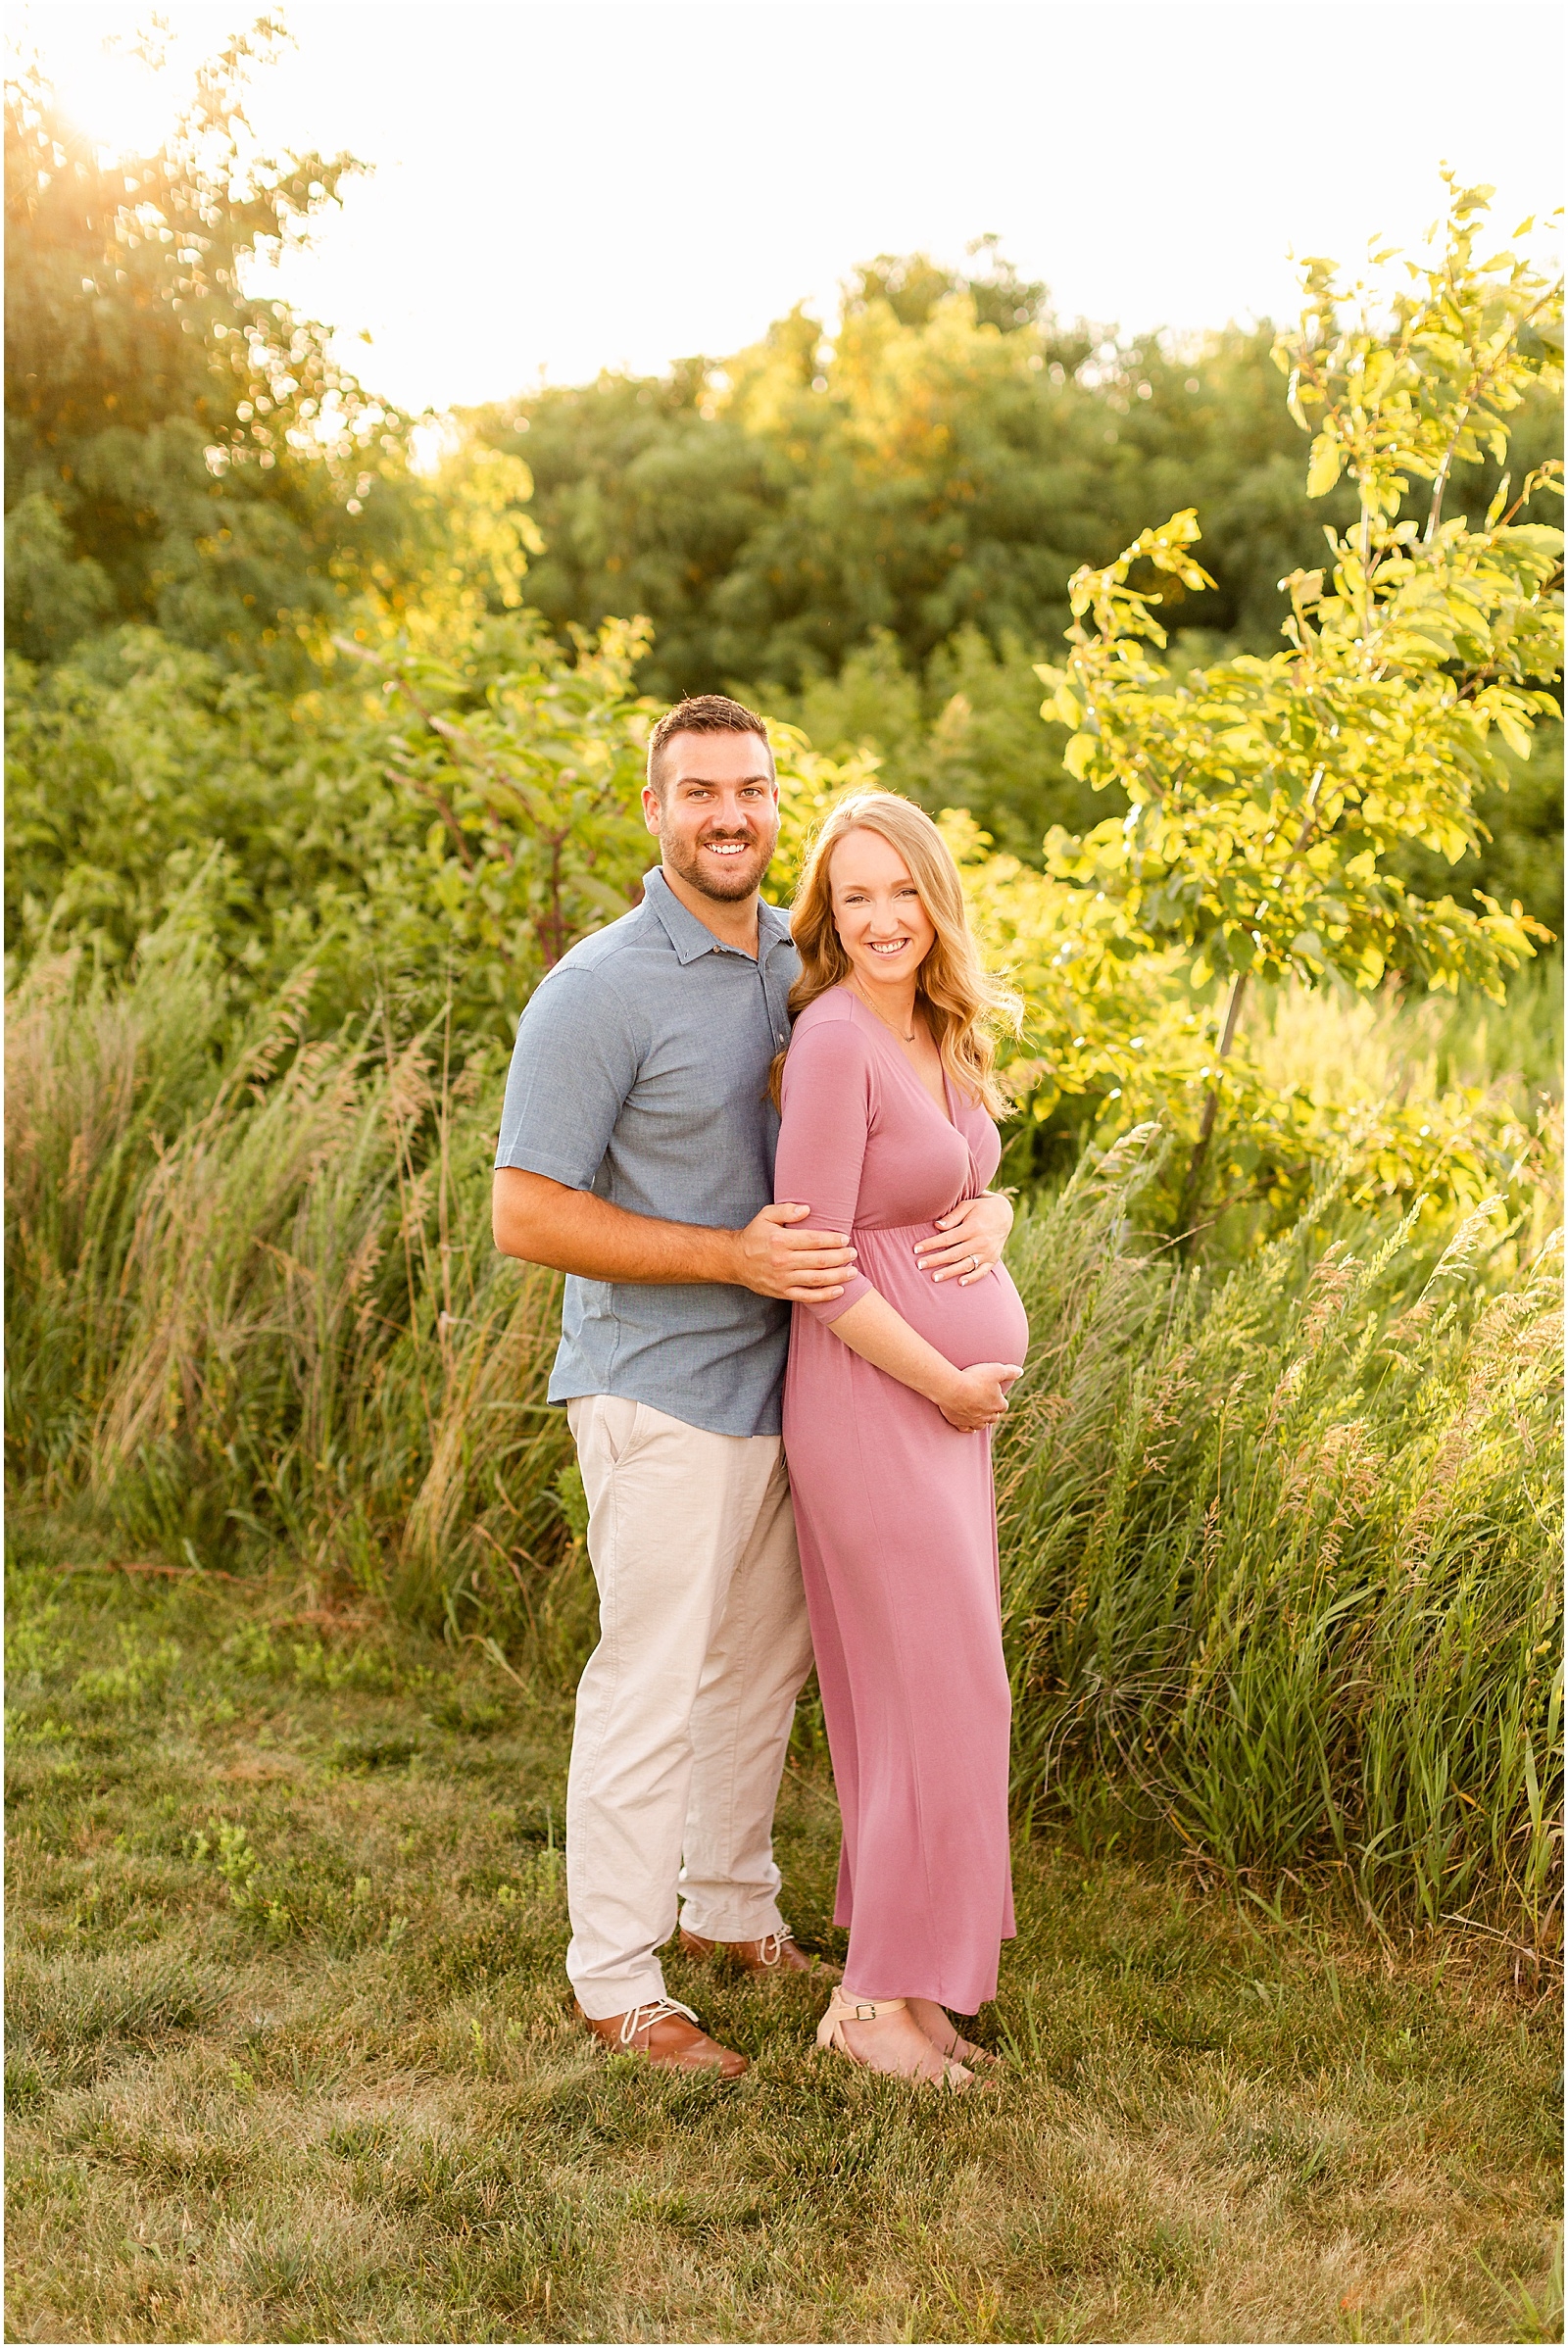 Ellen and Jake | Maternity Session Bret and Brandie | Evansville Photographers | @bretandbrandie-0001.jpg